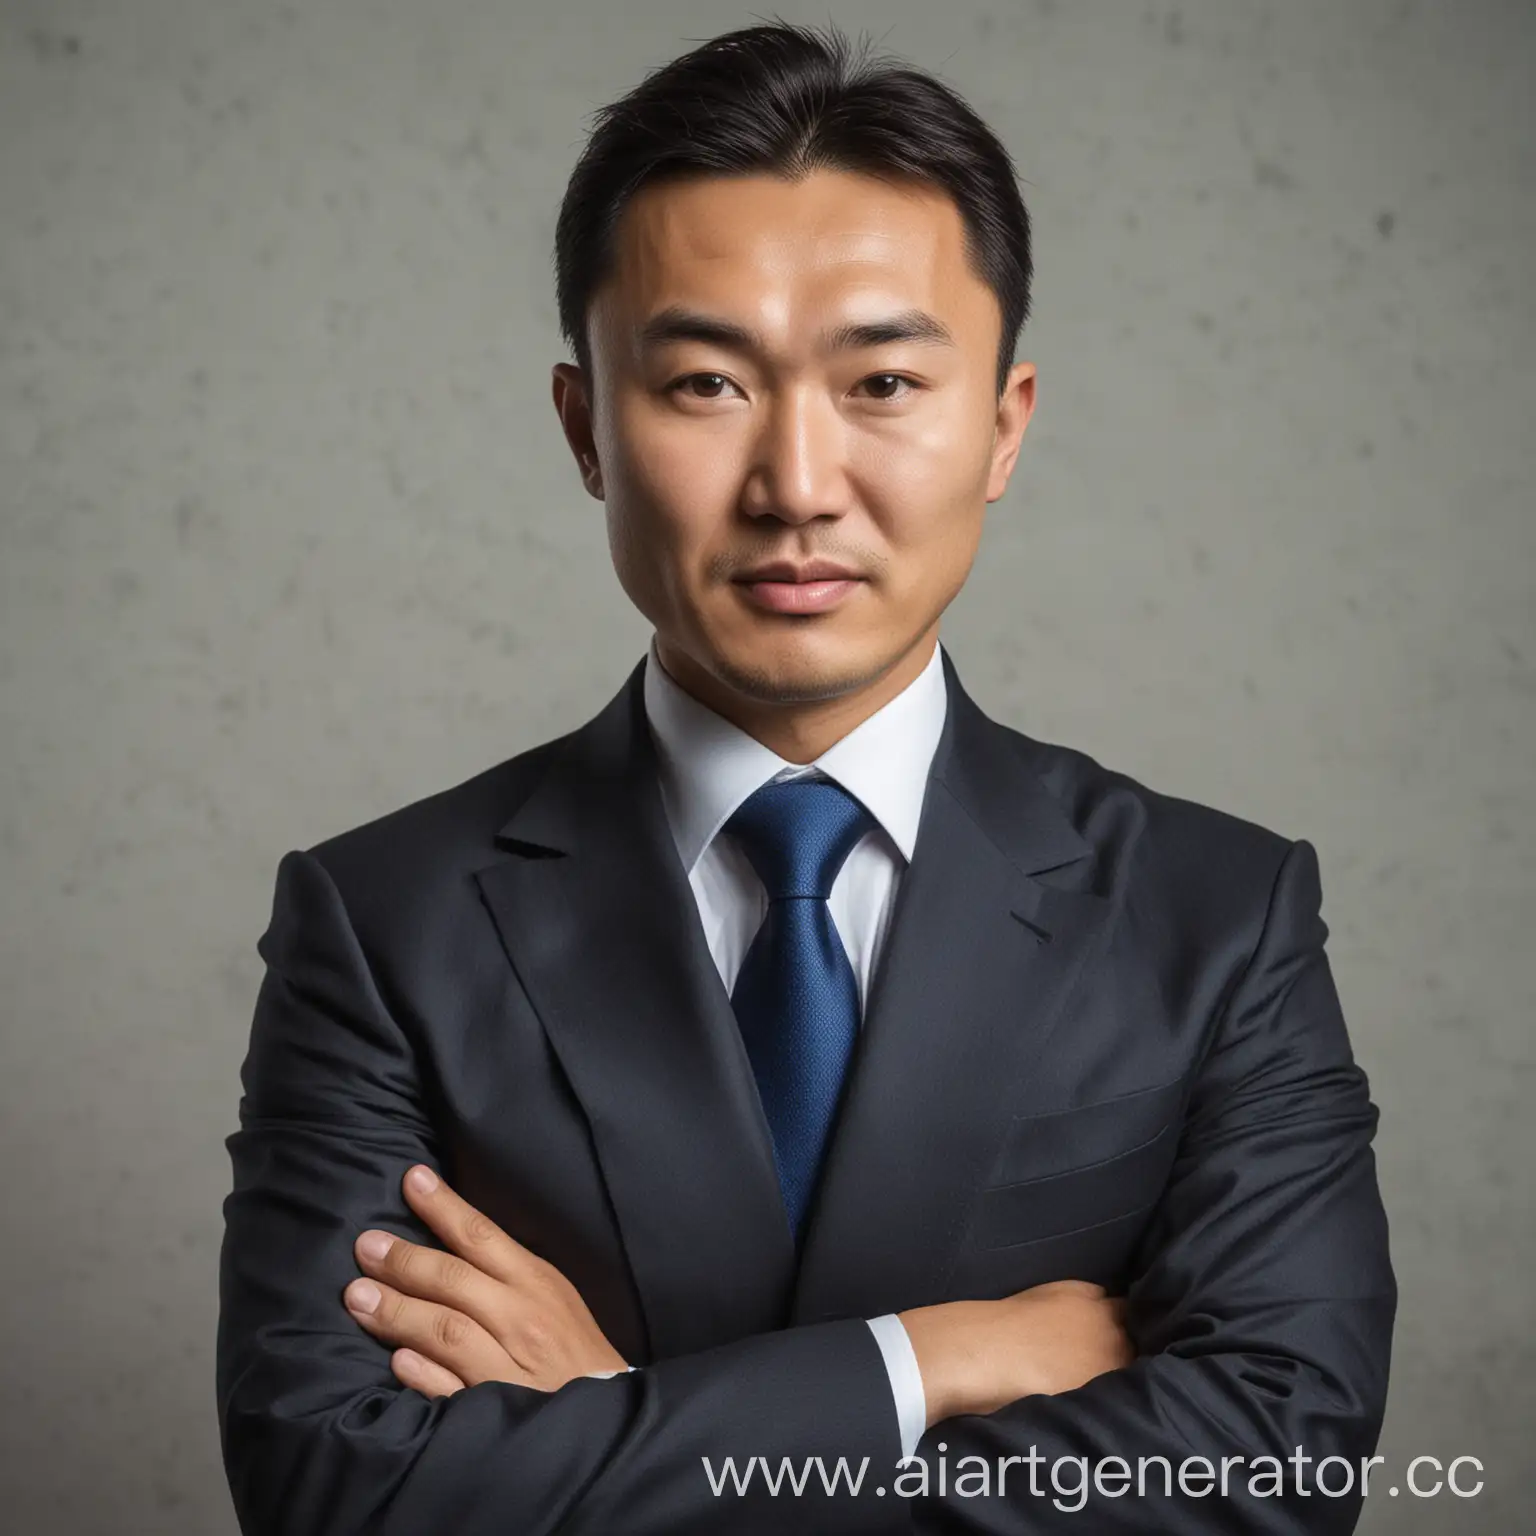 Kazakh businessman